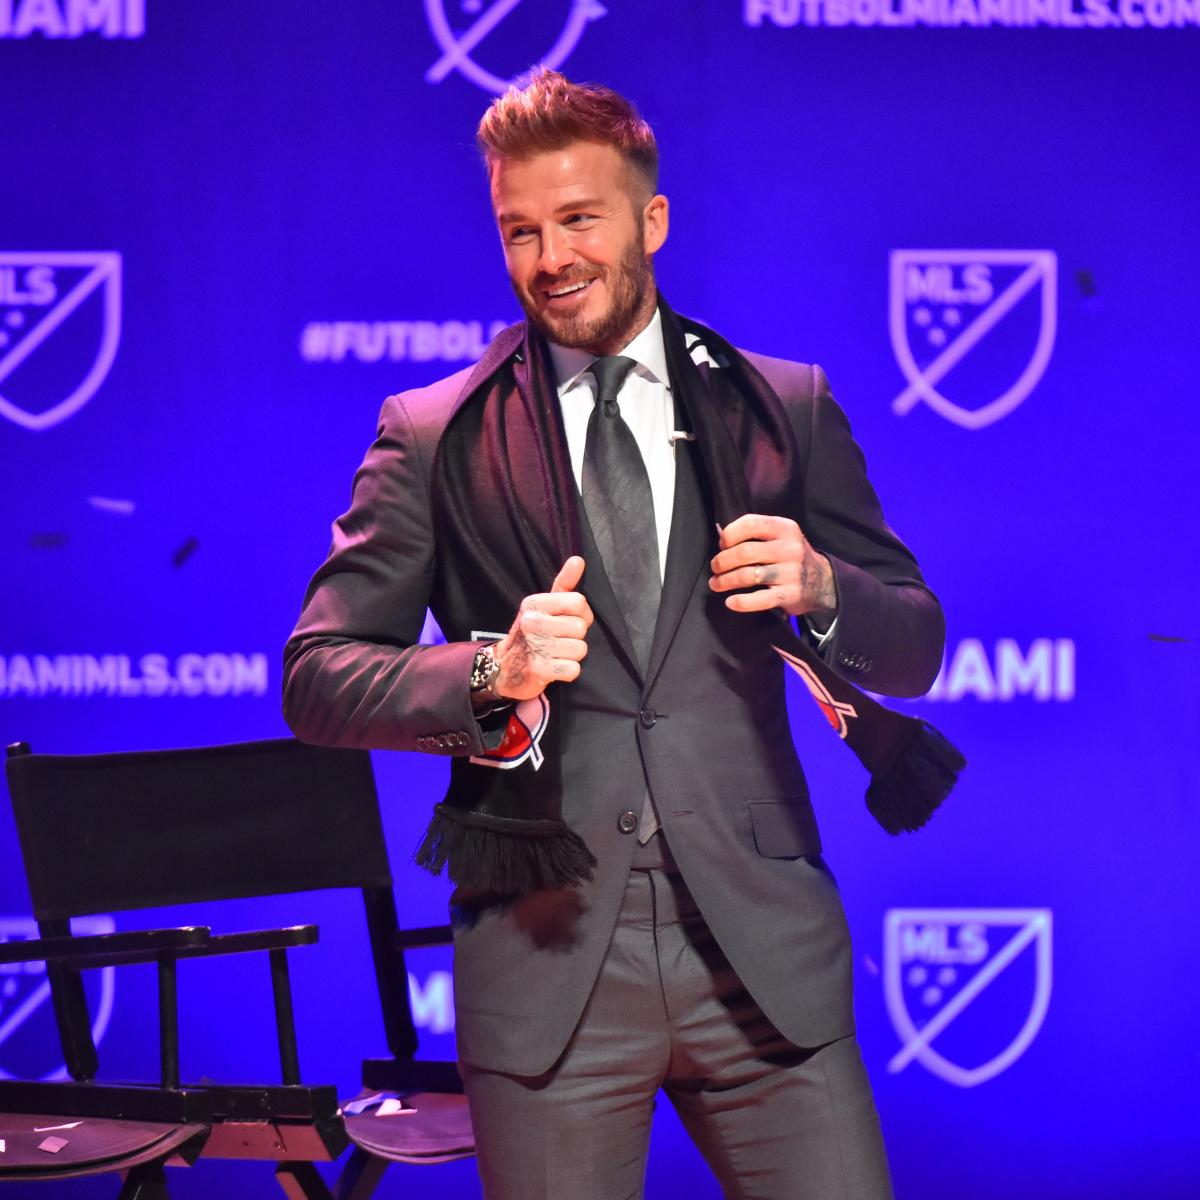 Inter Miami CF - Orlando: David Beckham sighs in relief as